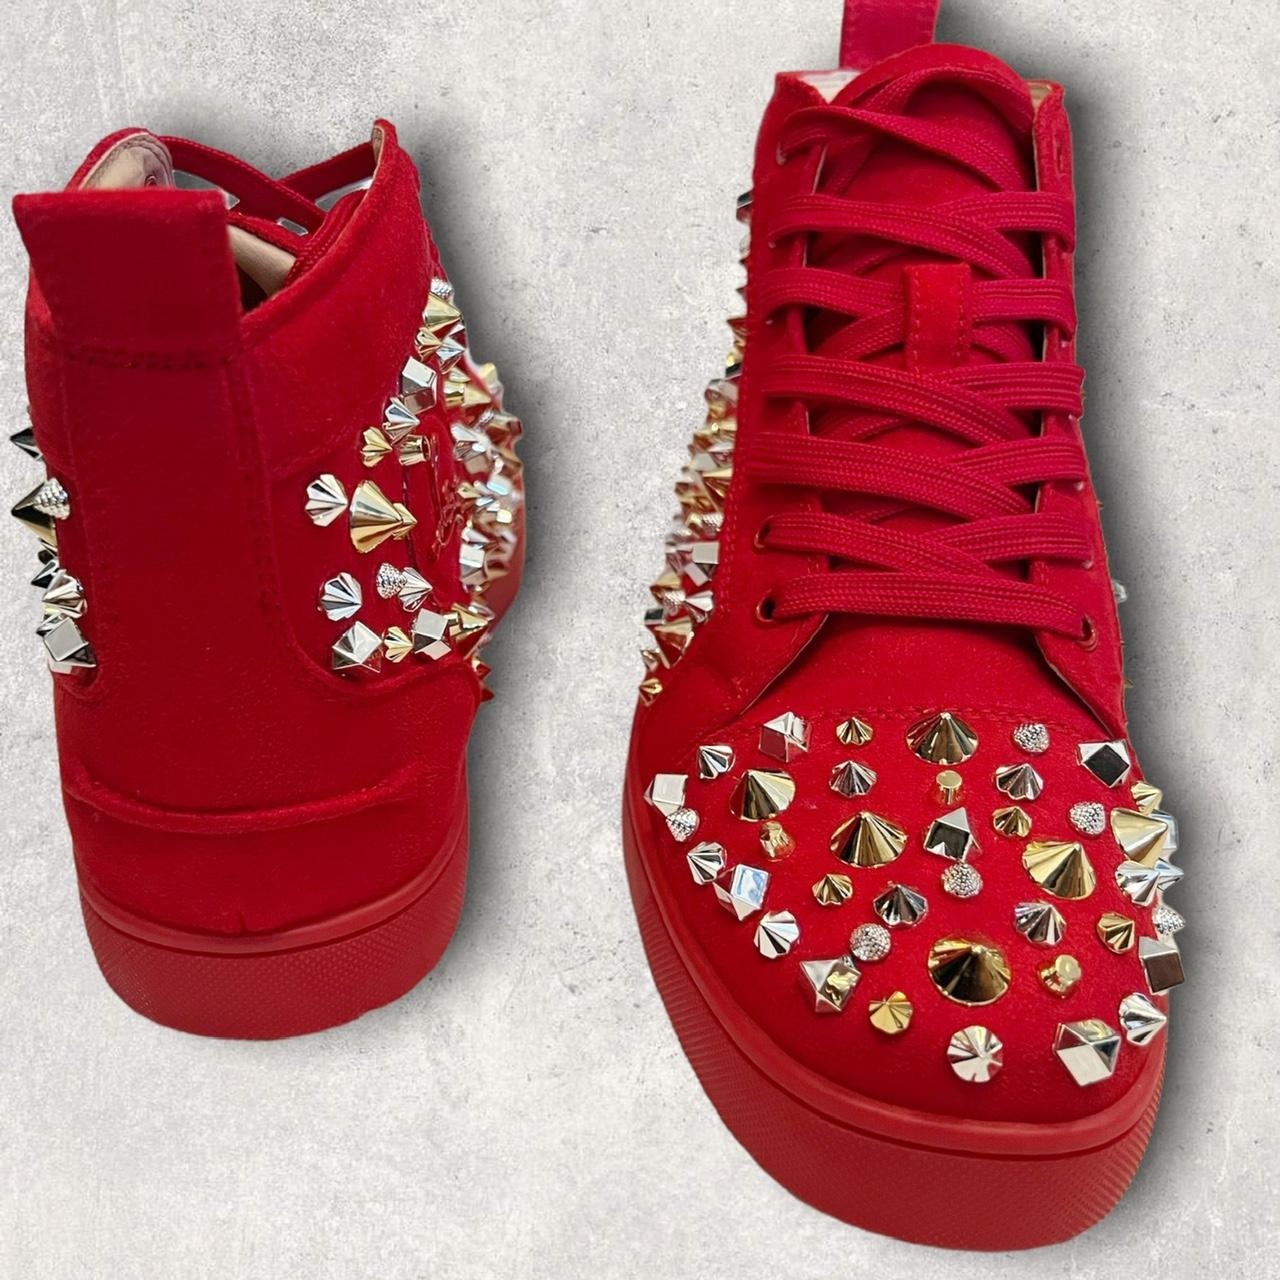 Christian Louboutin mens sneakers Size 8.5/9 UK. 9 Depop